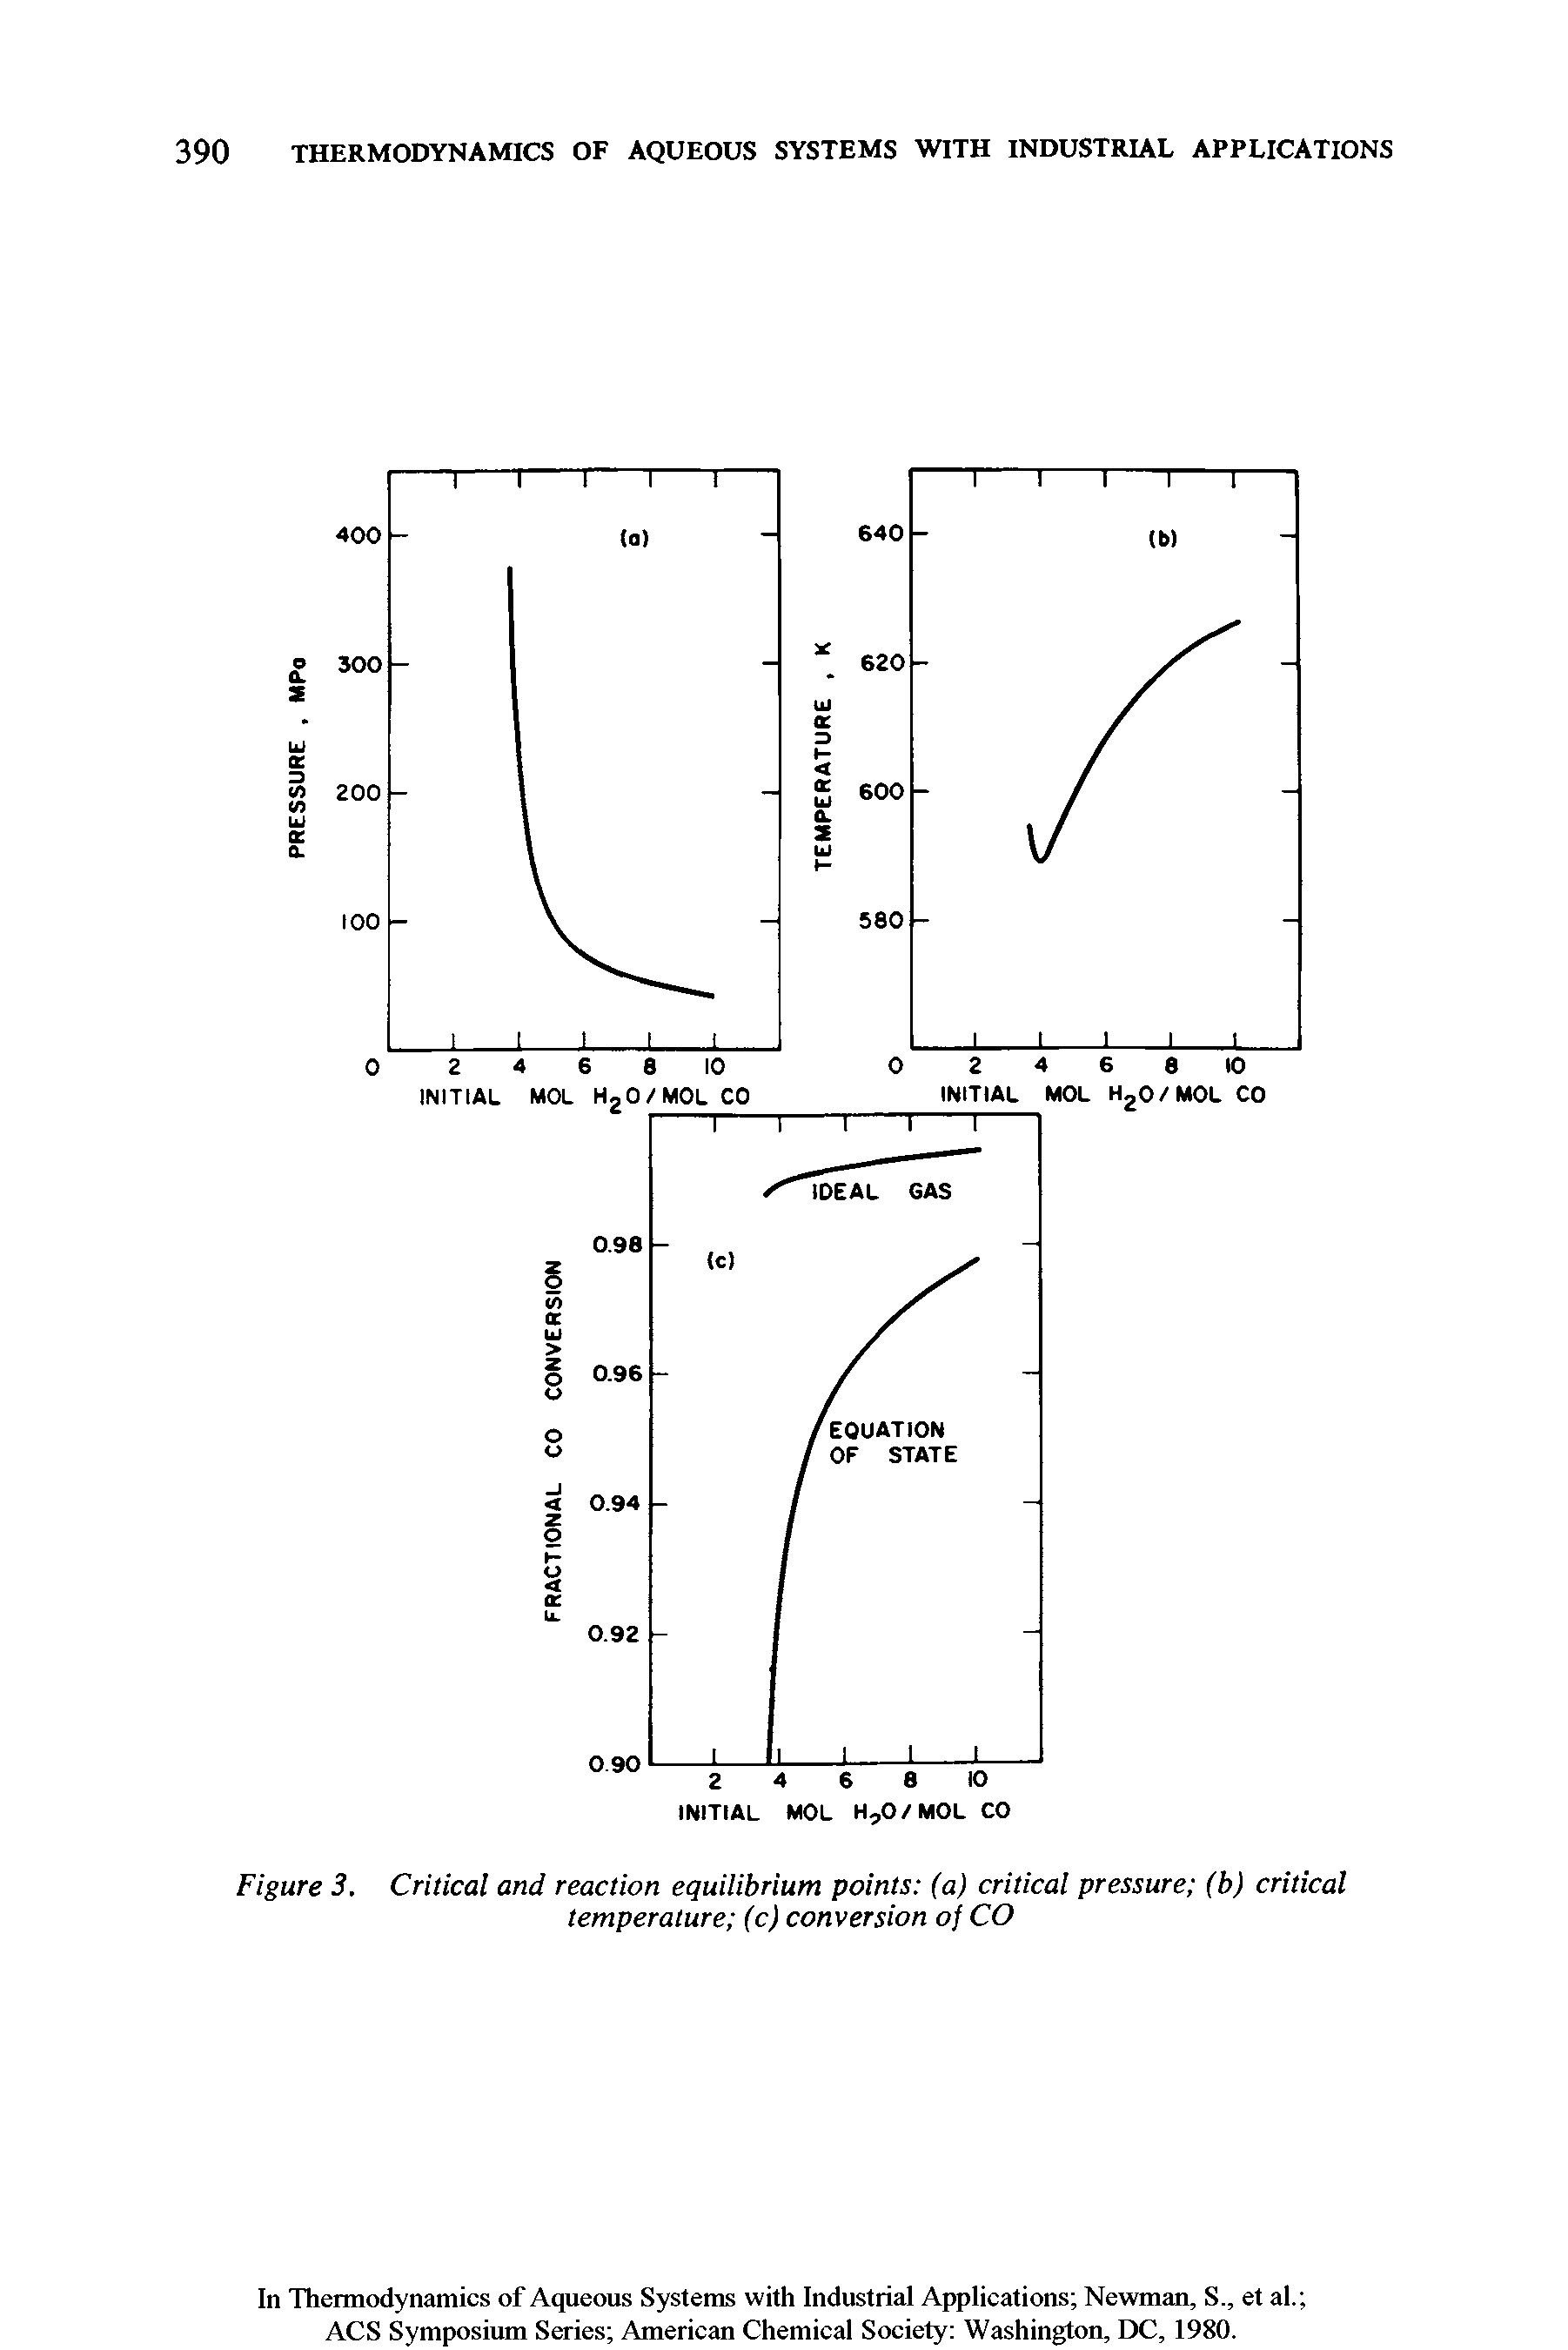 Figure 3. Critical and reaction equilibrium points (a) critical pressure (b) critical temperature (c) conversion of CO...